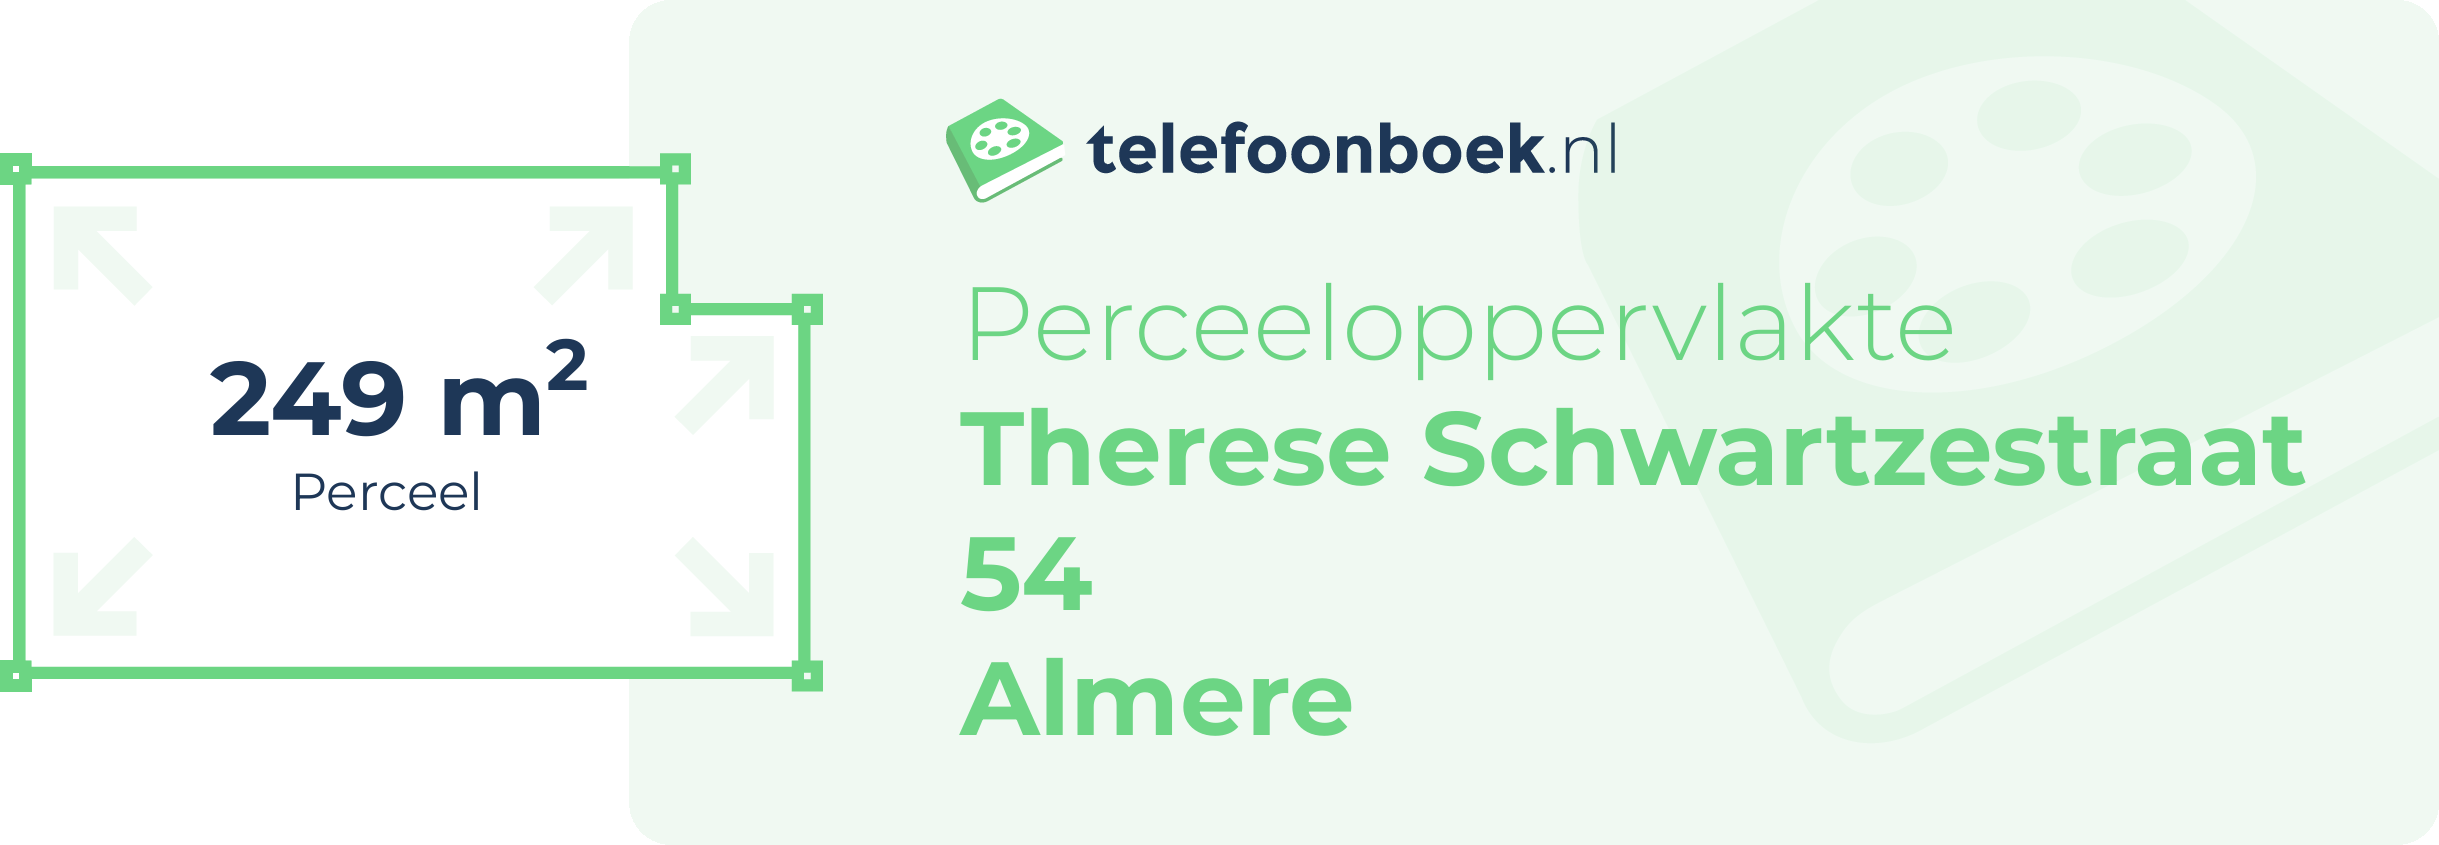 Perceeloppervlakte Therese Schwartzestraat 54 Almere